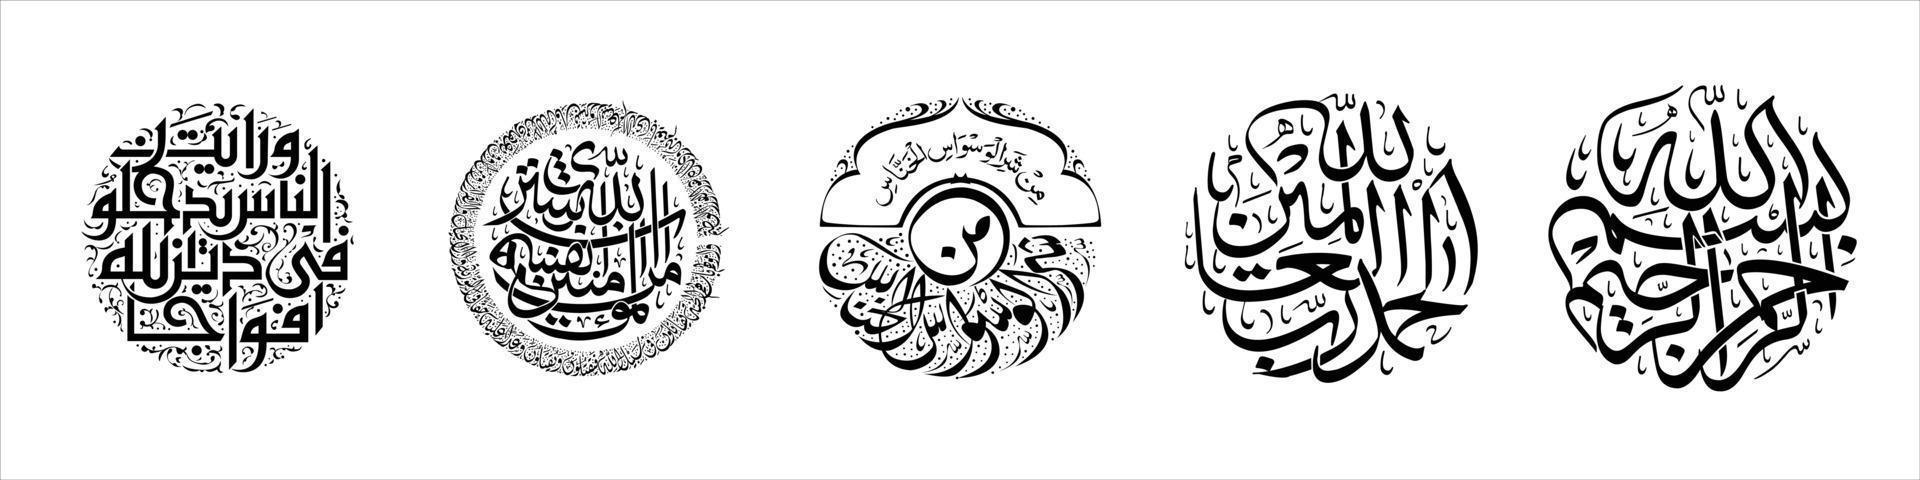 caligrafía árabe creativa, ilustración vectorial vector